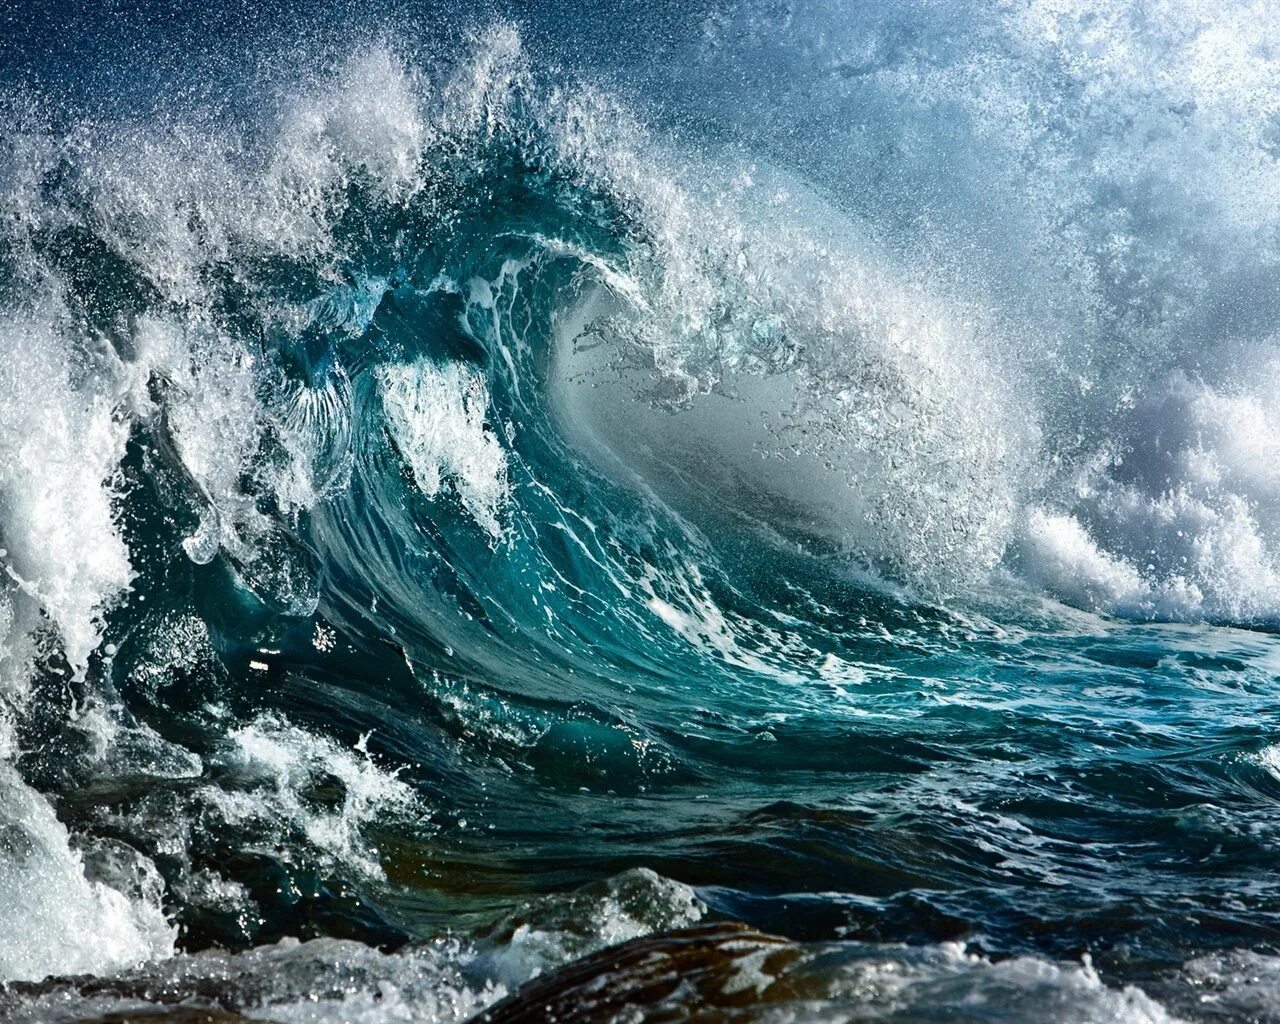 More fora. Море шторм. Море, волны. Бушующее море. Океан волны.